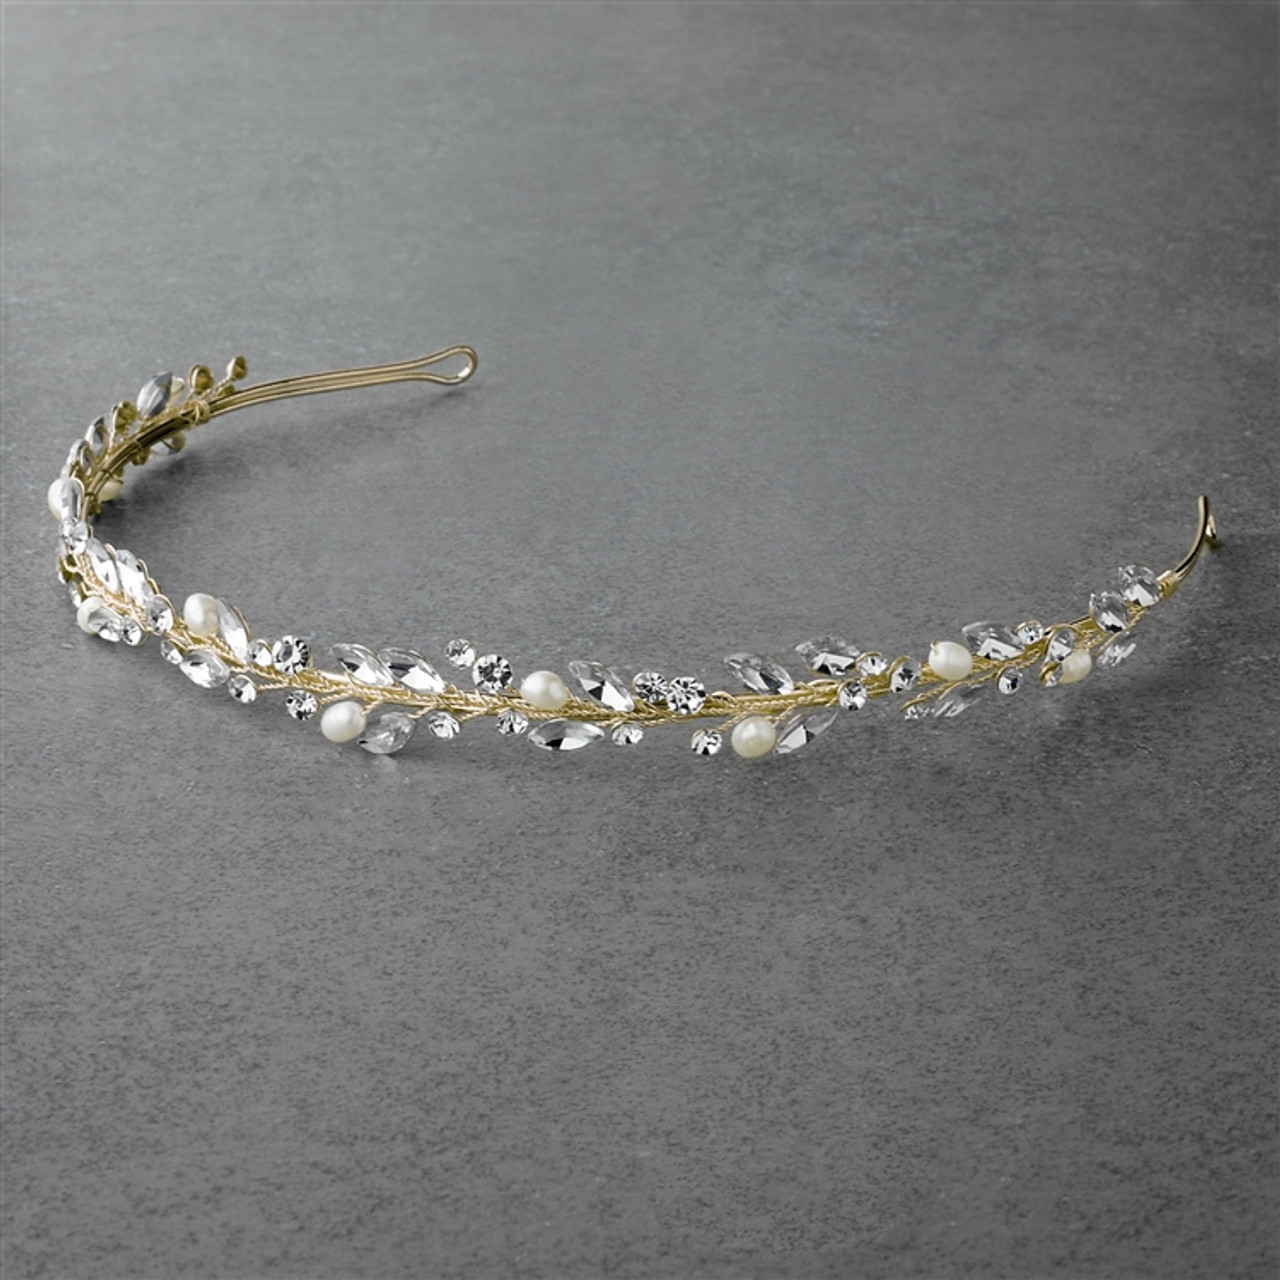 Handmade Light Gold Bridal Headband Tiara with Genuine Freshwater Pearls & Crystals 4624T-I-LTG